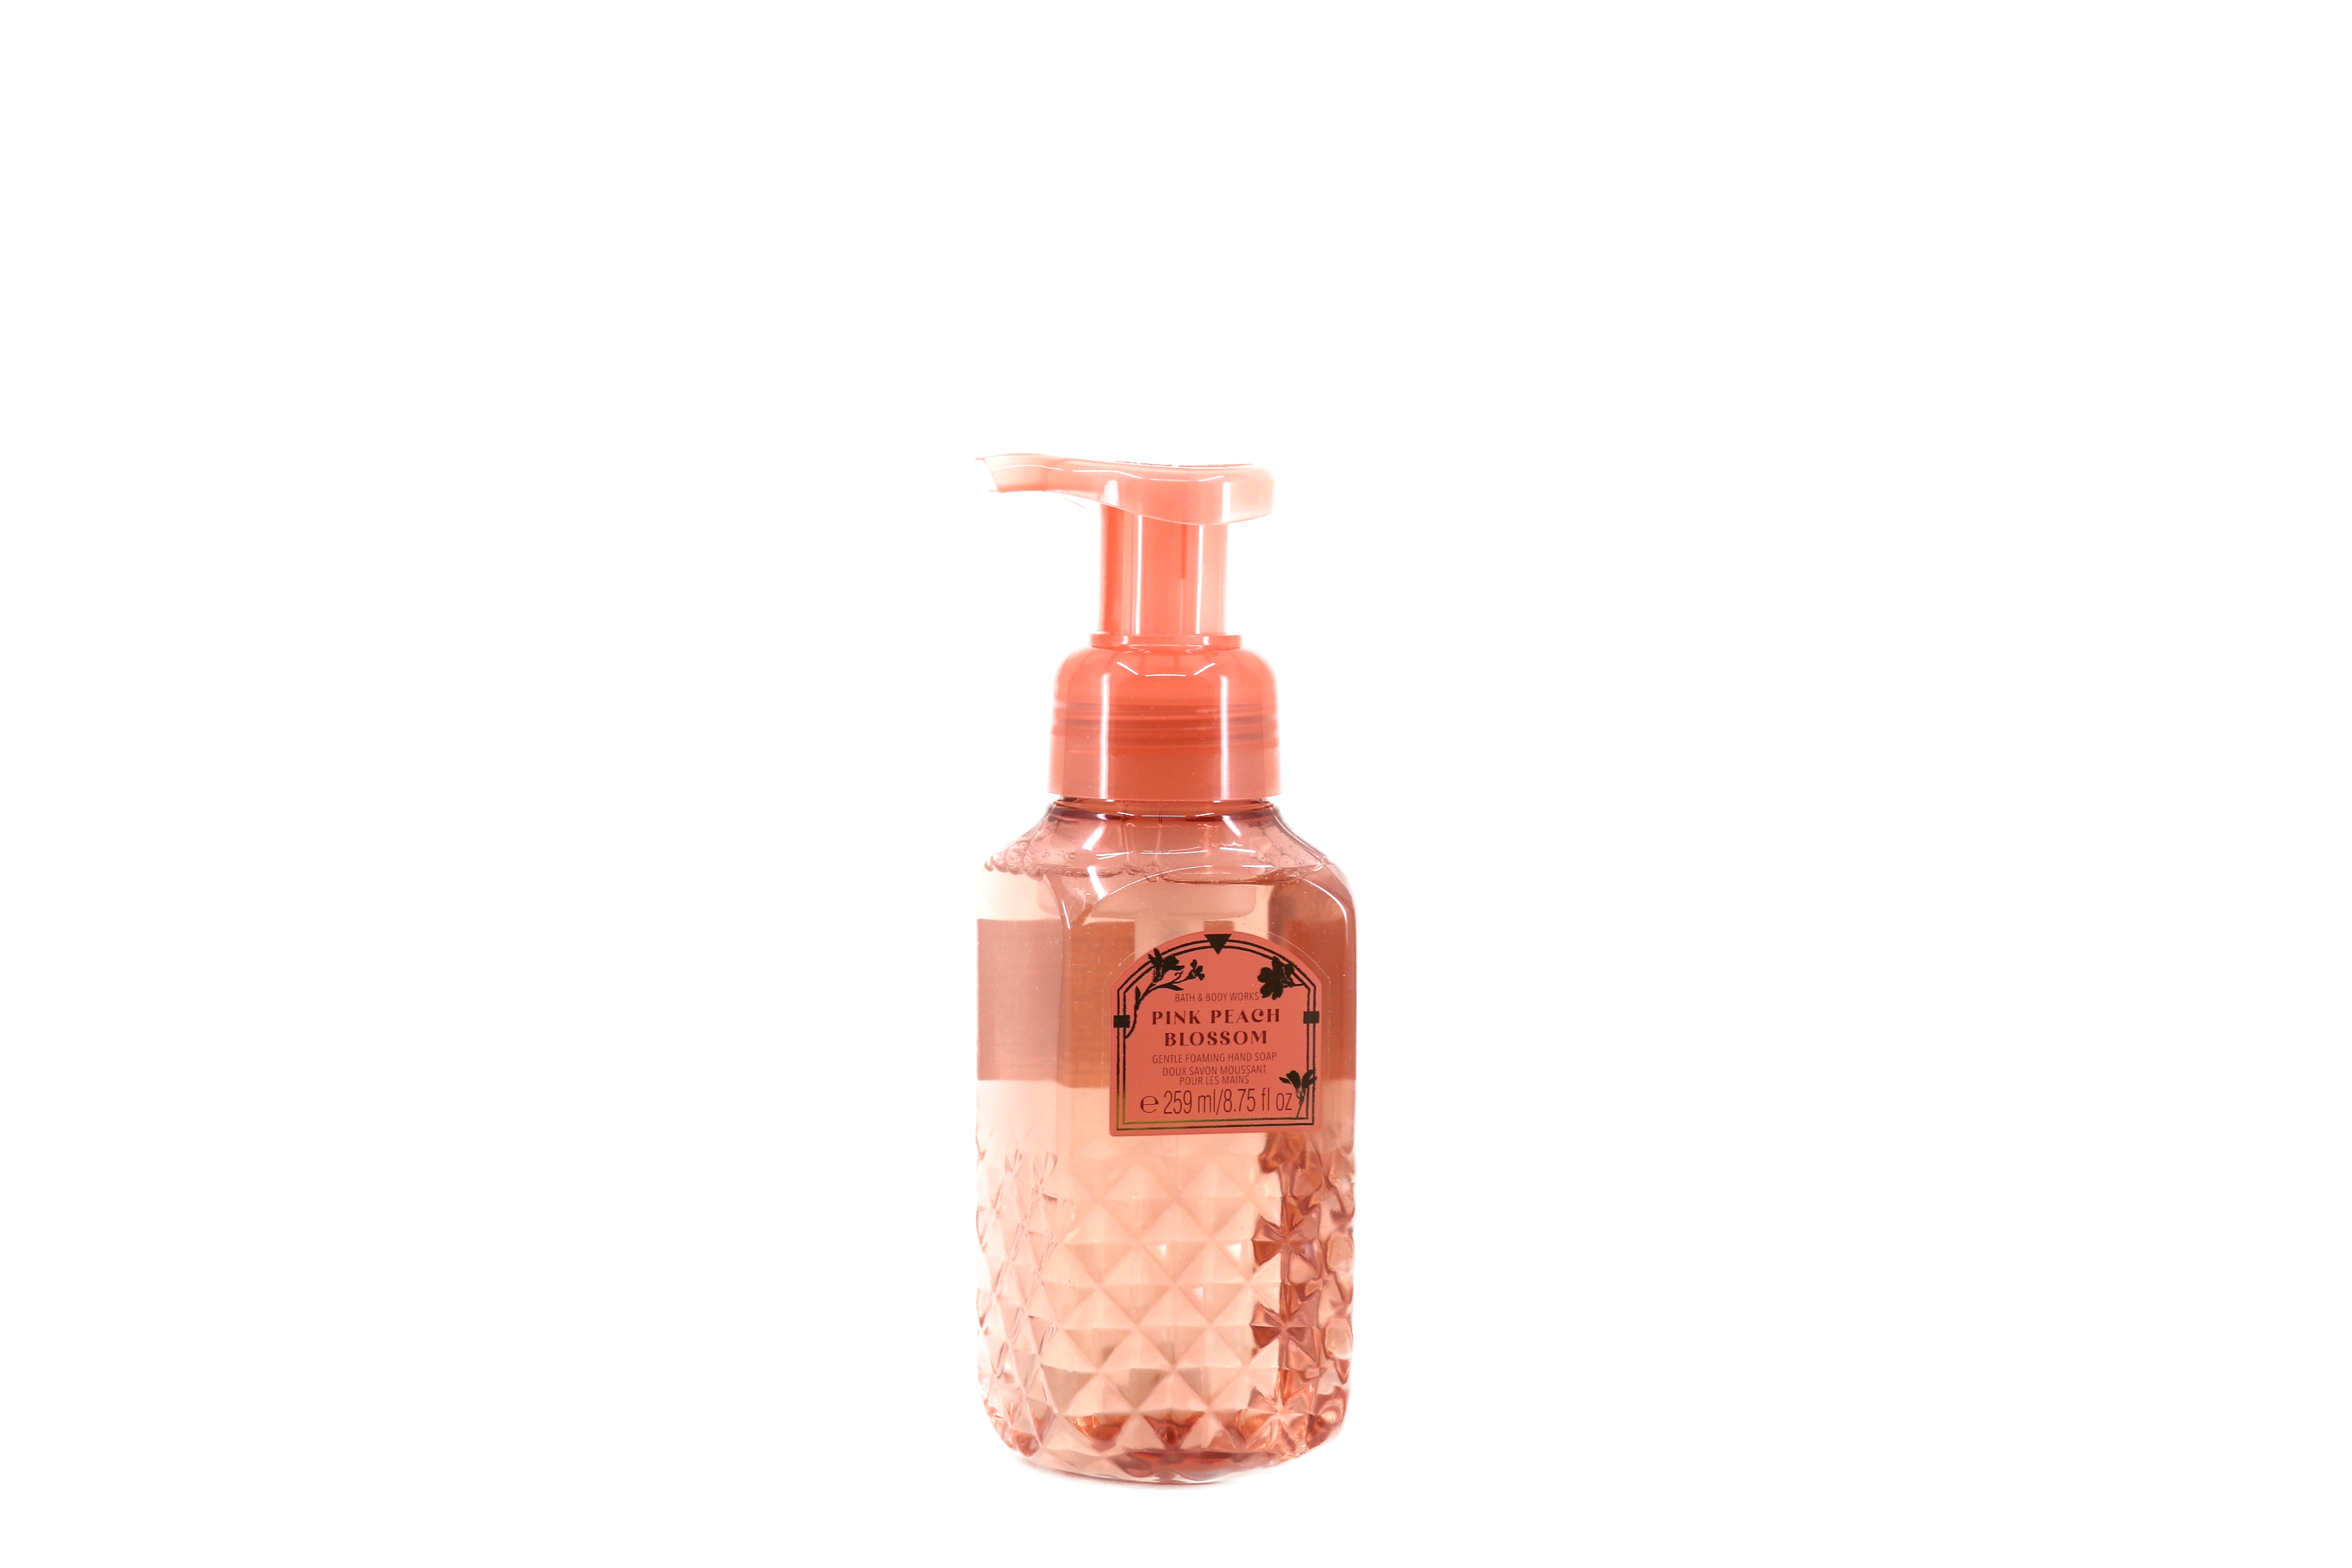 Bath & Body Works Pink Peach Blossom Gentle Foaming Hand Soap